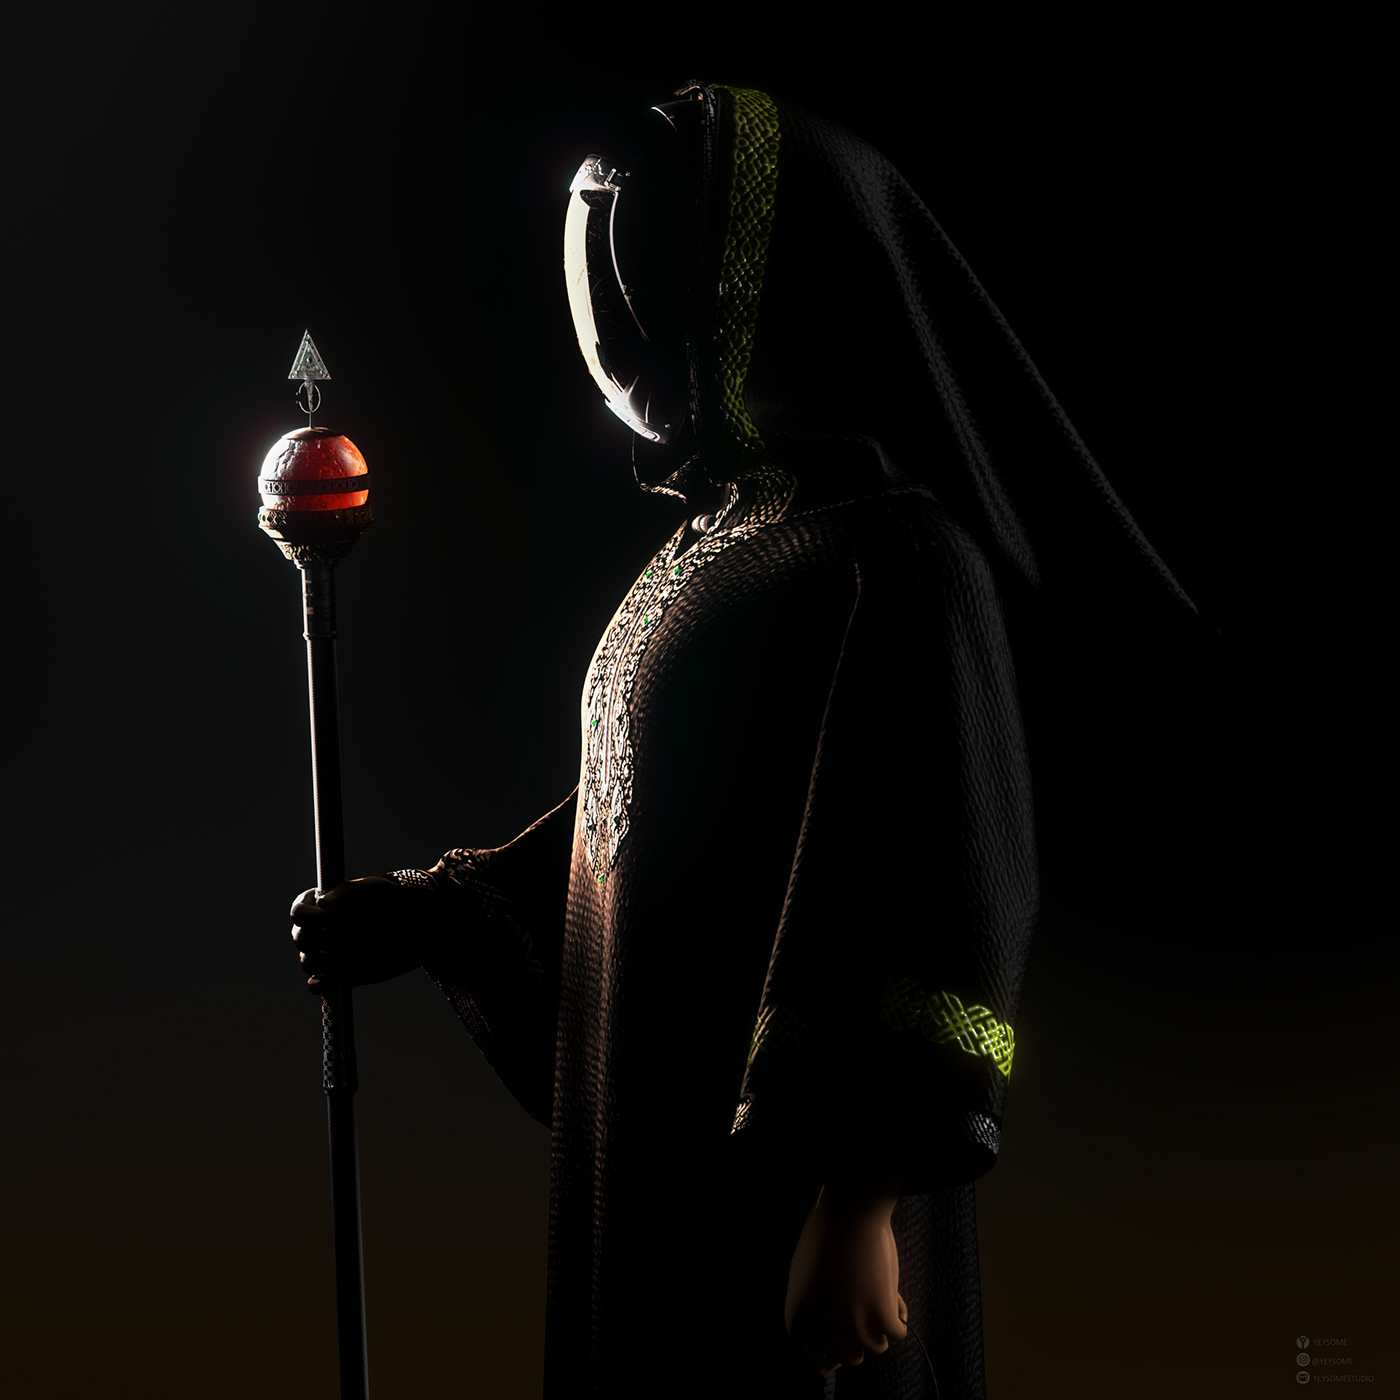 digital3d Character king warrior scepter Helmet sci-fi amazigh Morocco